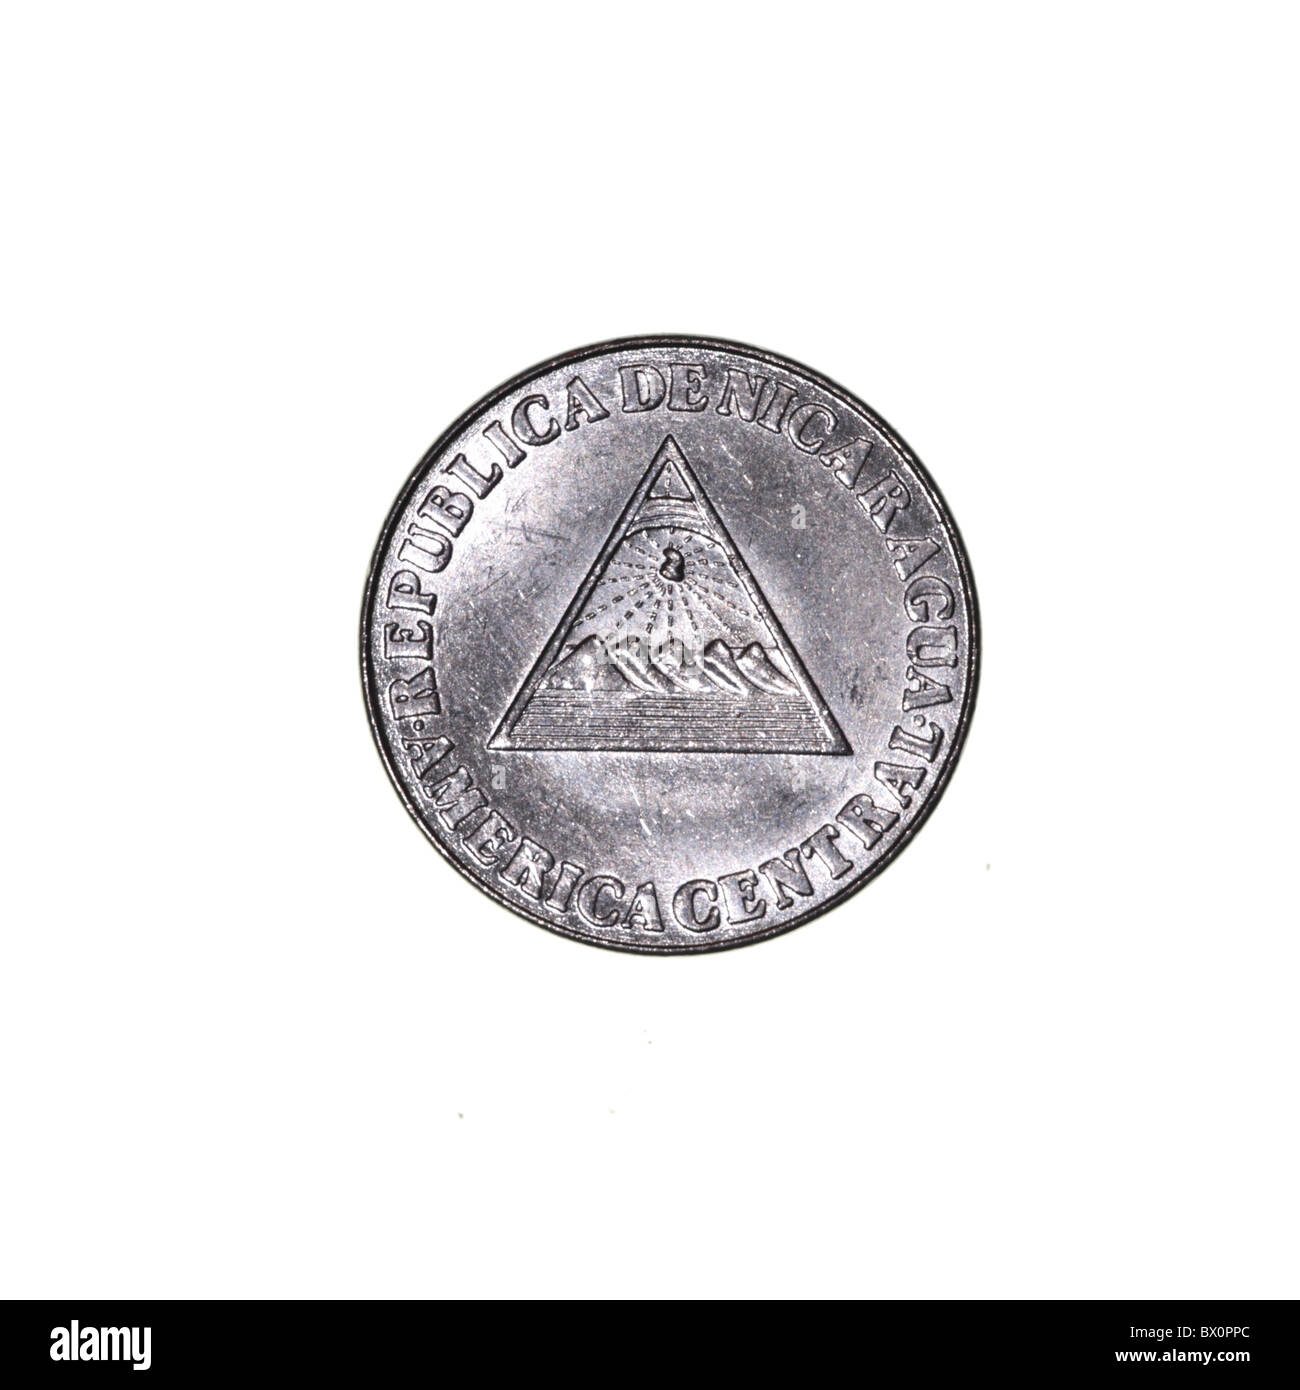 Nicaragua coin Stock Photo